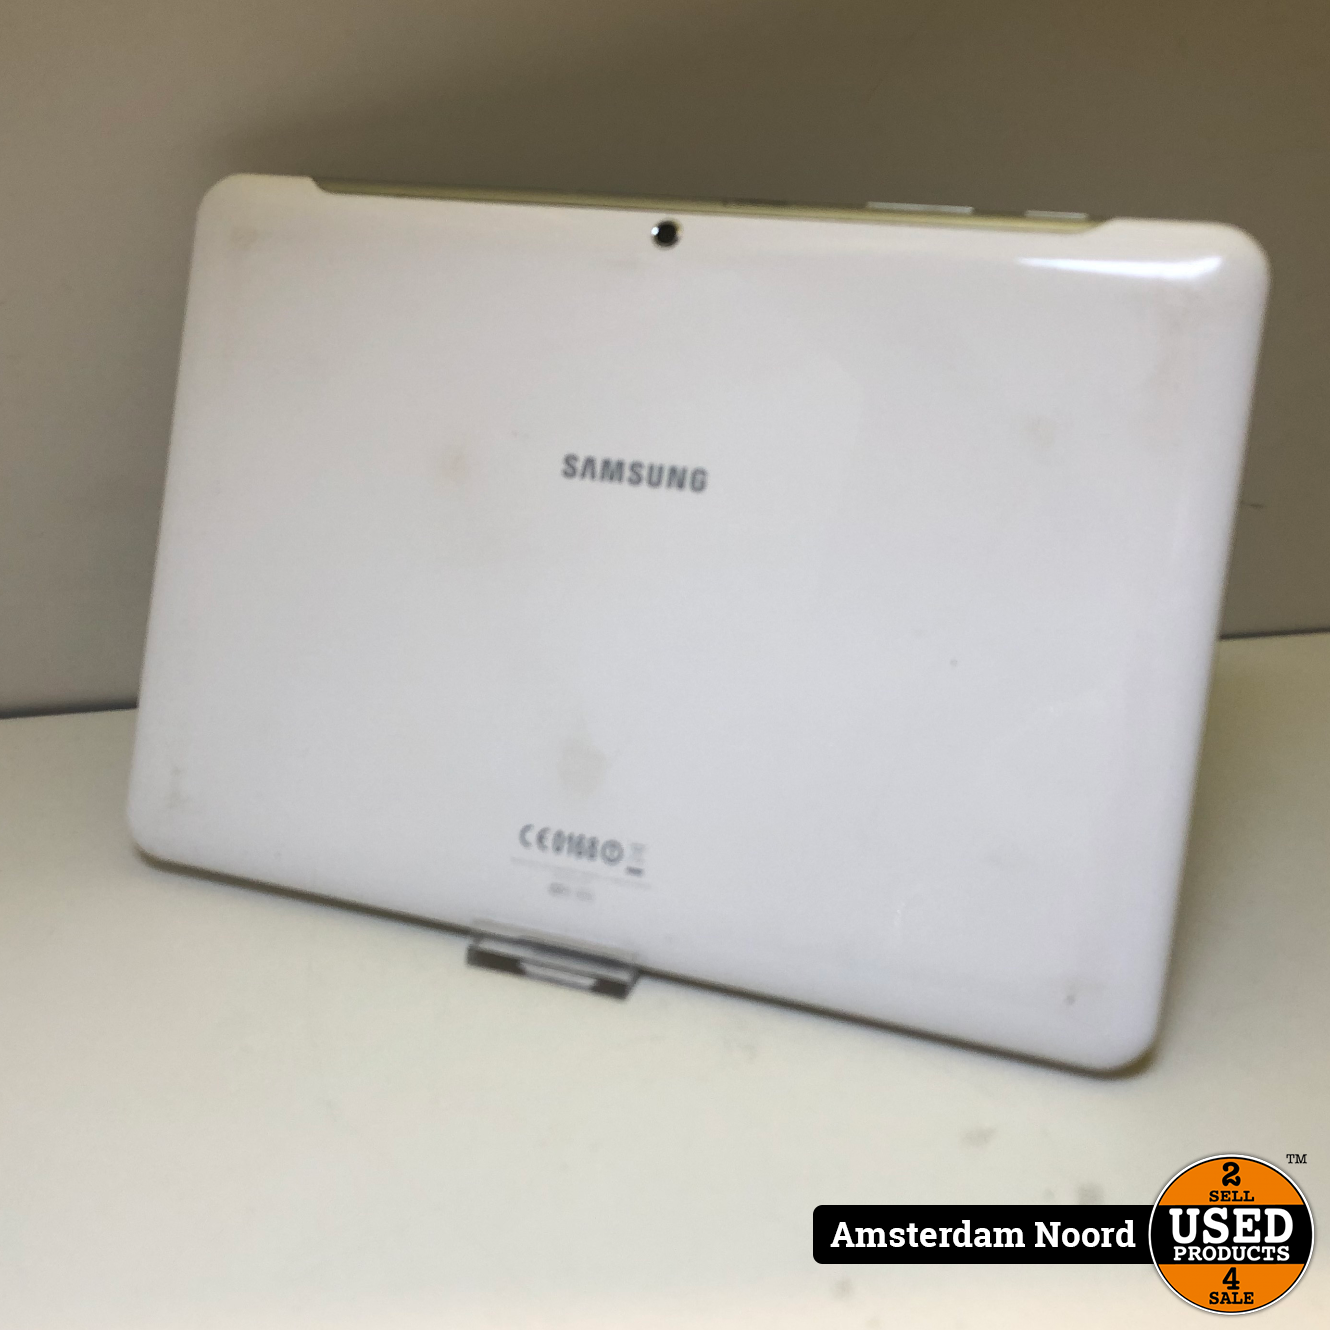 identificatie Regenachtig Sitcom Samsung Galaxy Tab 2 10.1 16GB Wifi - Used Products Amsterdam Noord